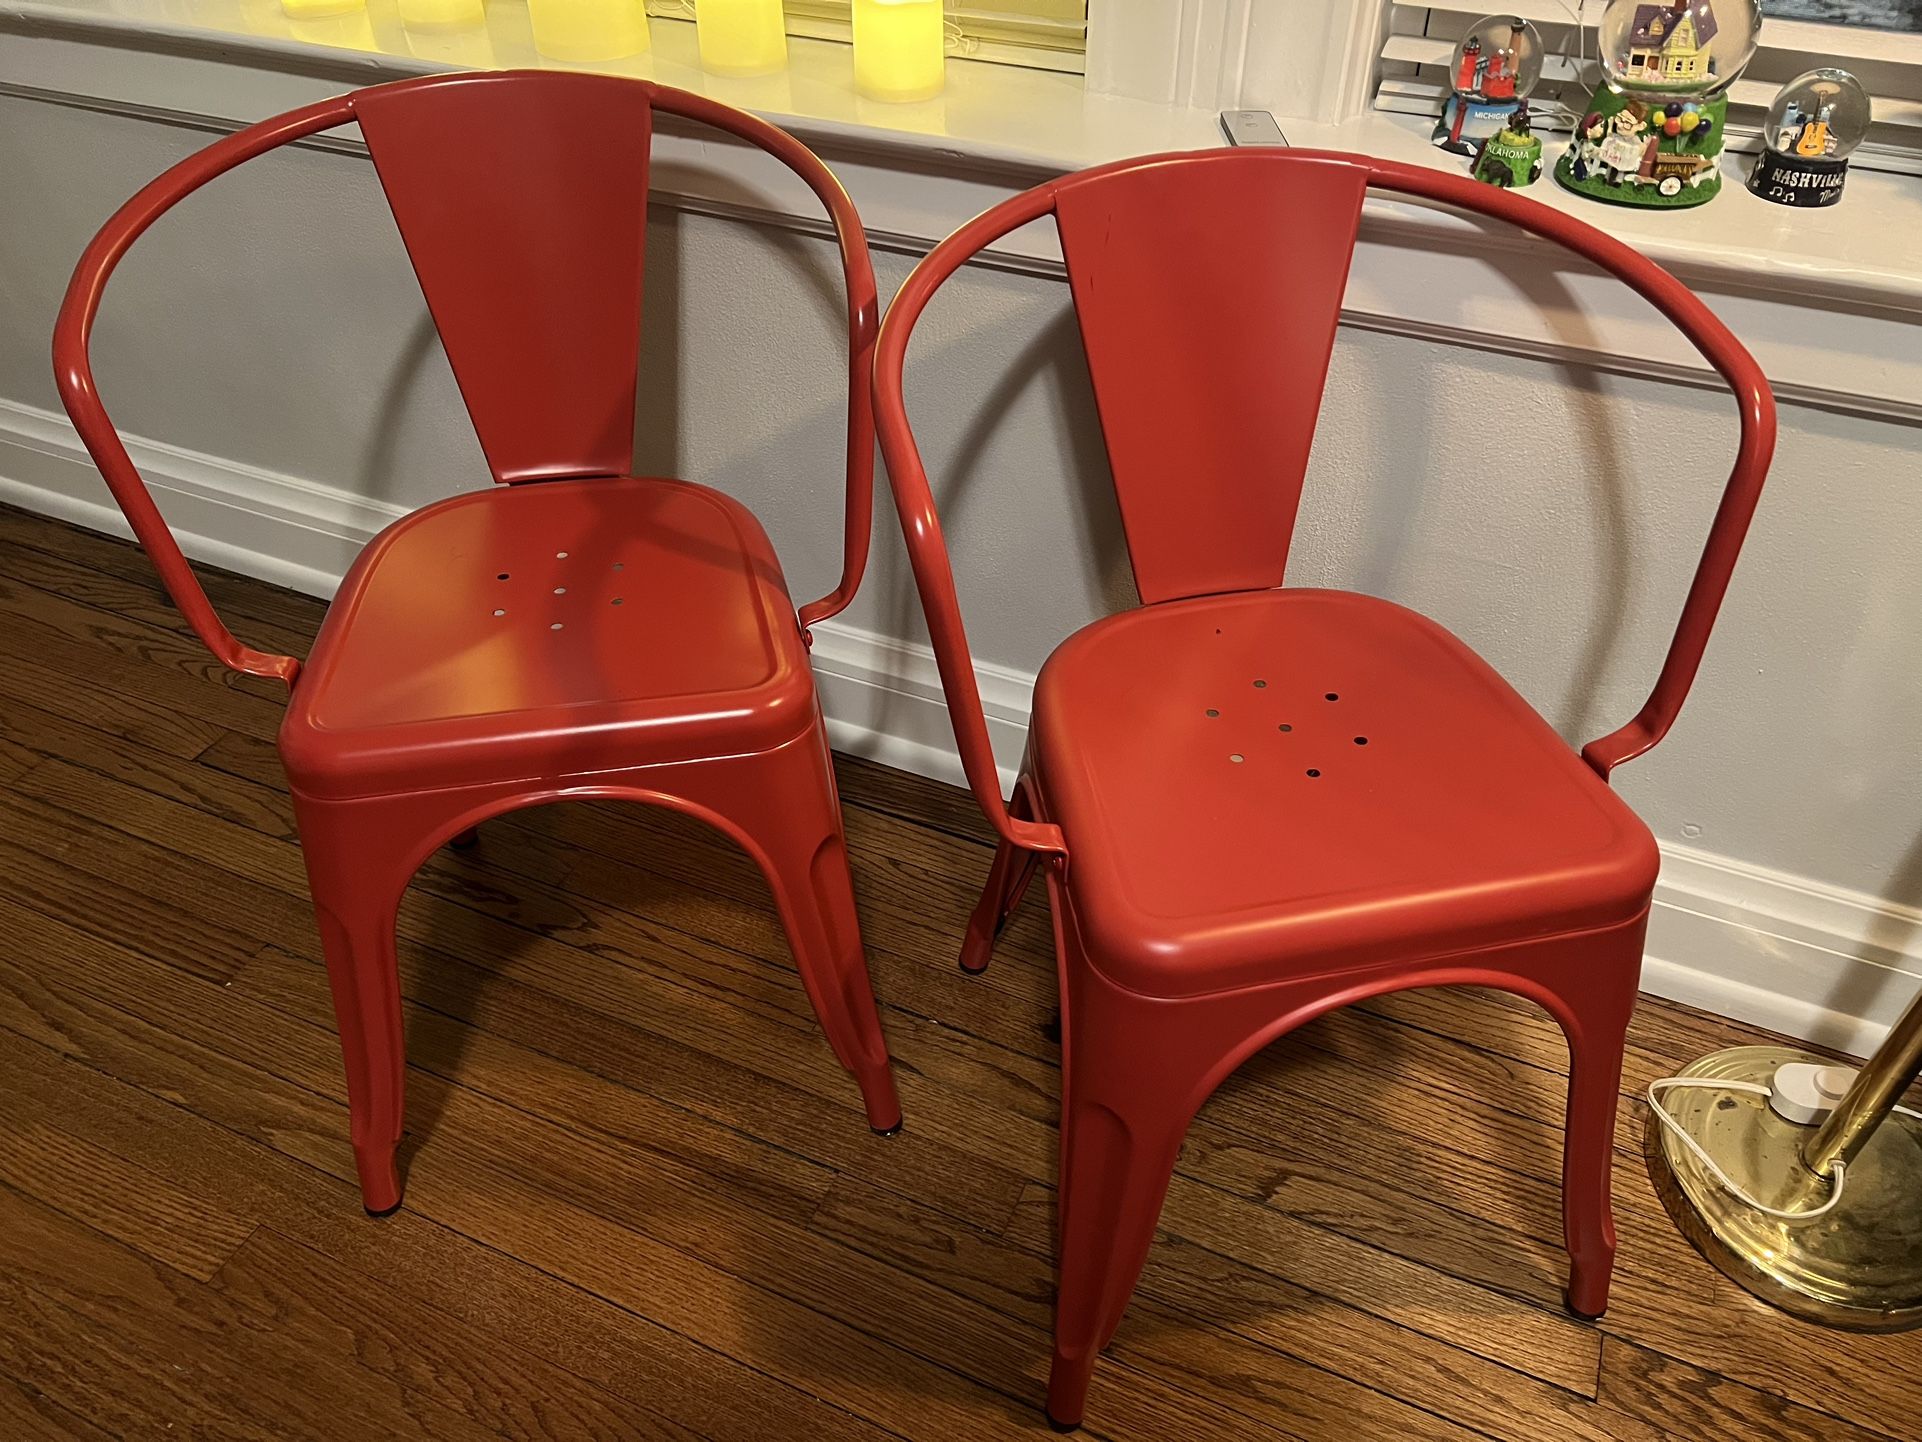 Metal Dining Chairs Set of 2 Indoor Outdoor - RED